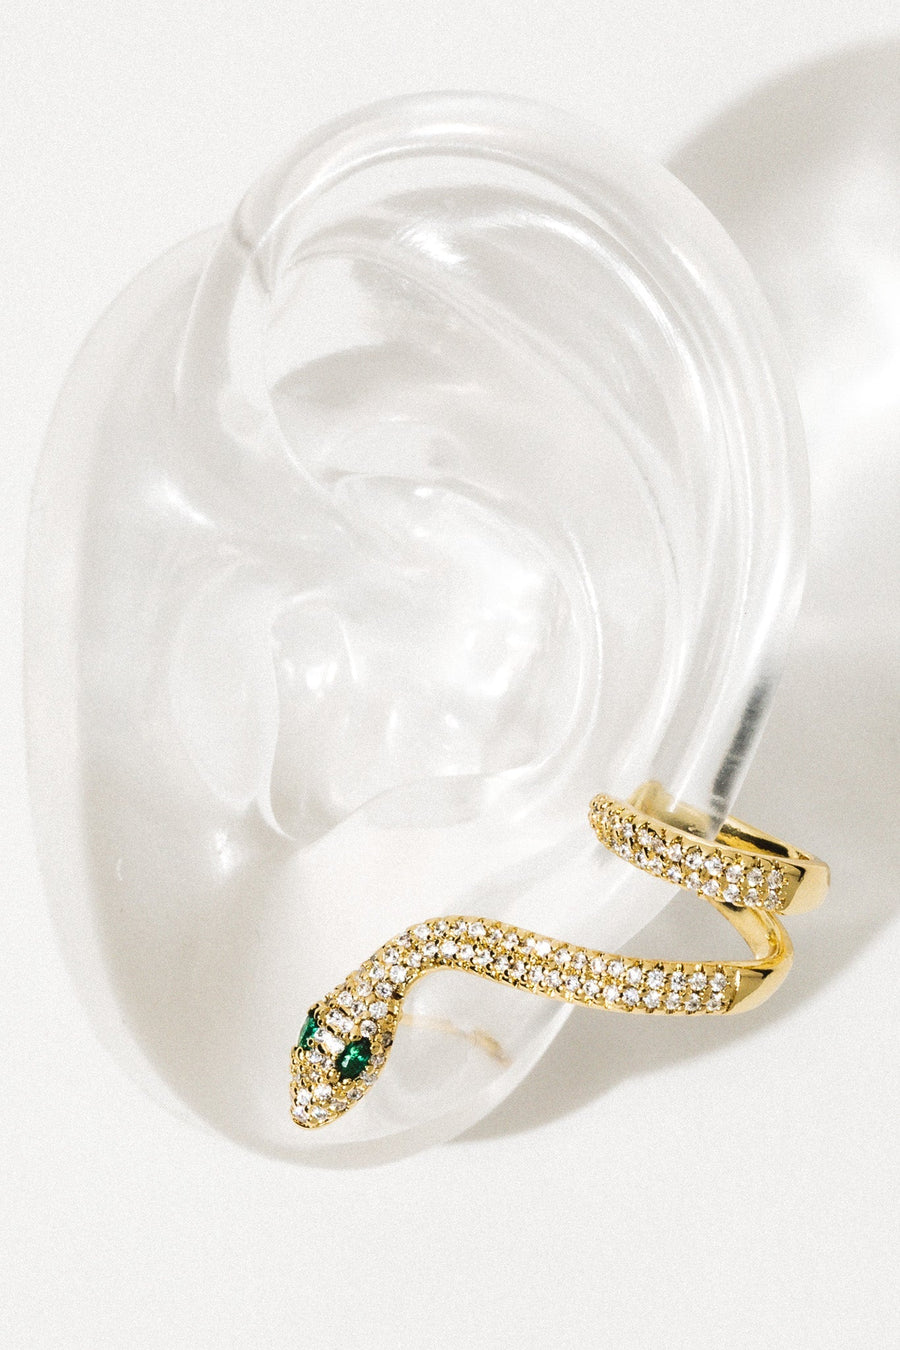 DLUXCA Jewelry Gold Copy of Ivy Serpent CZ Earrings